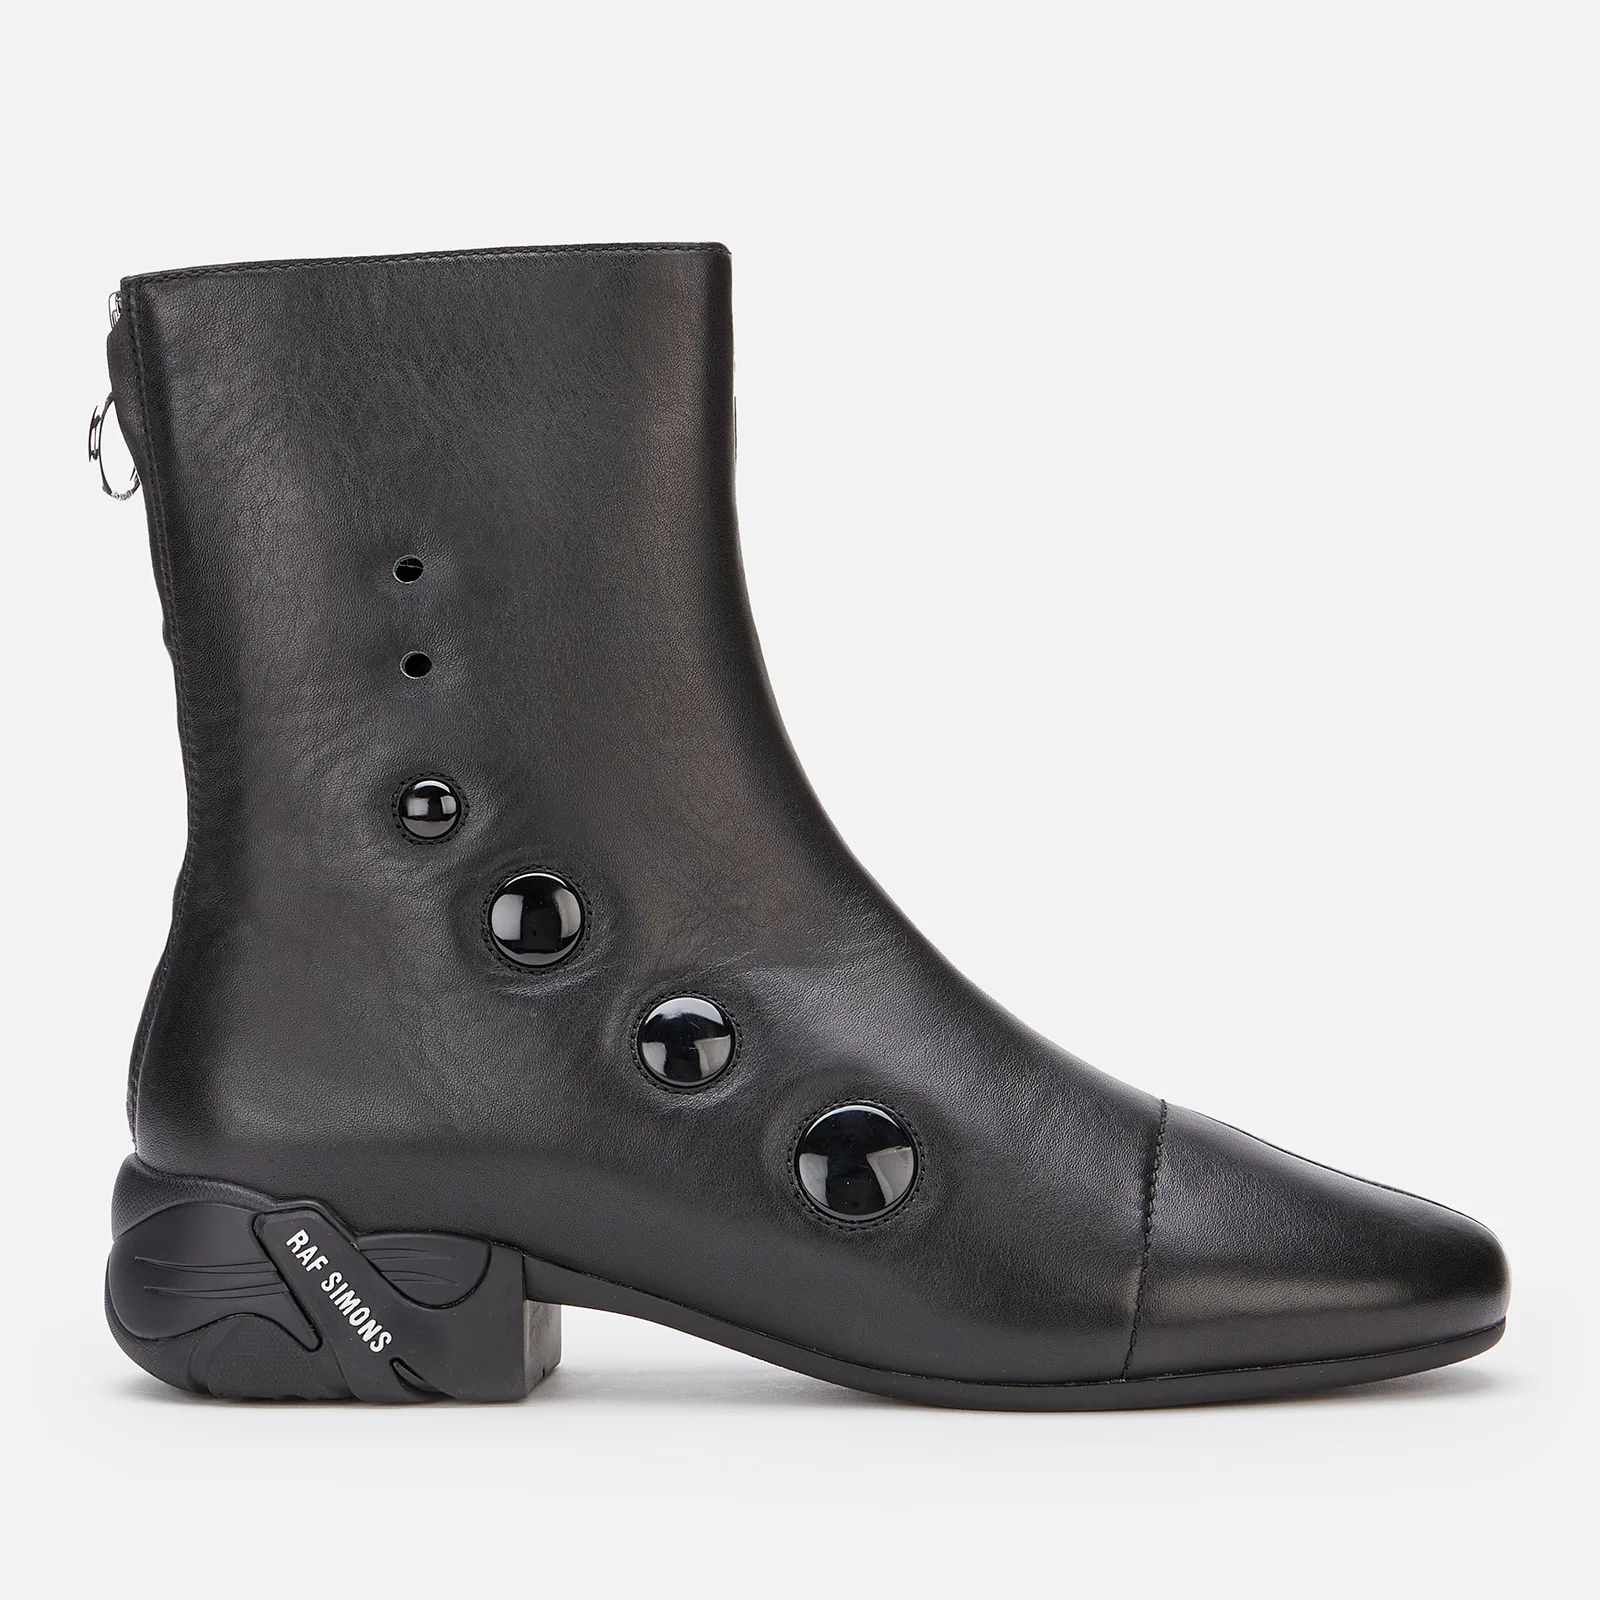 Raf Simons Men's 2001 Leather Boots - Black Image 1